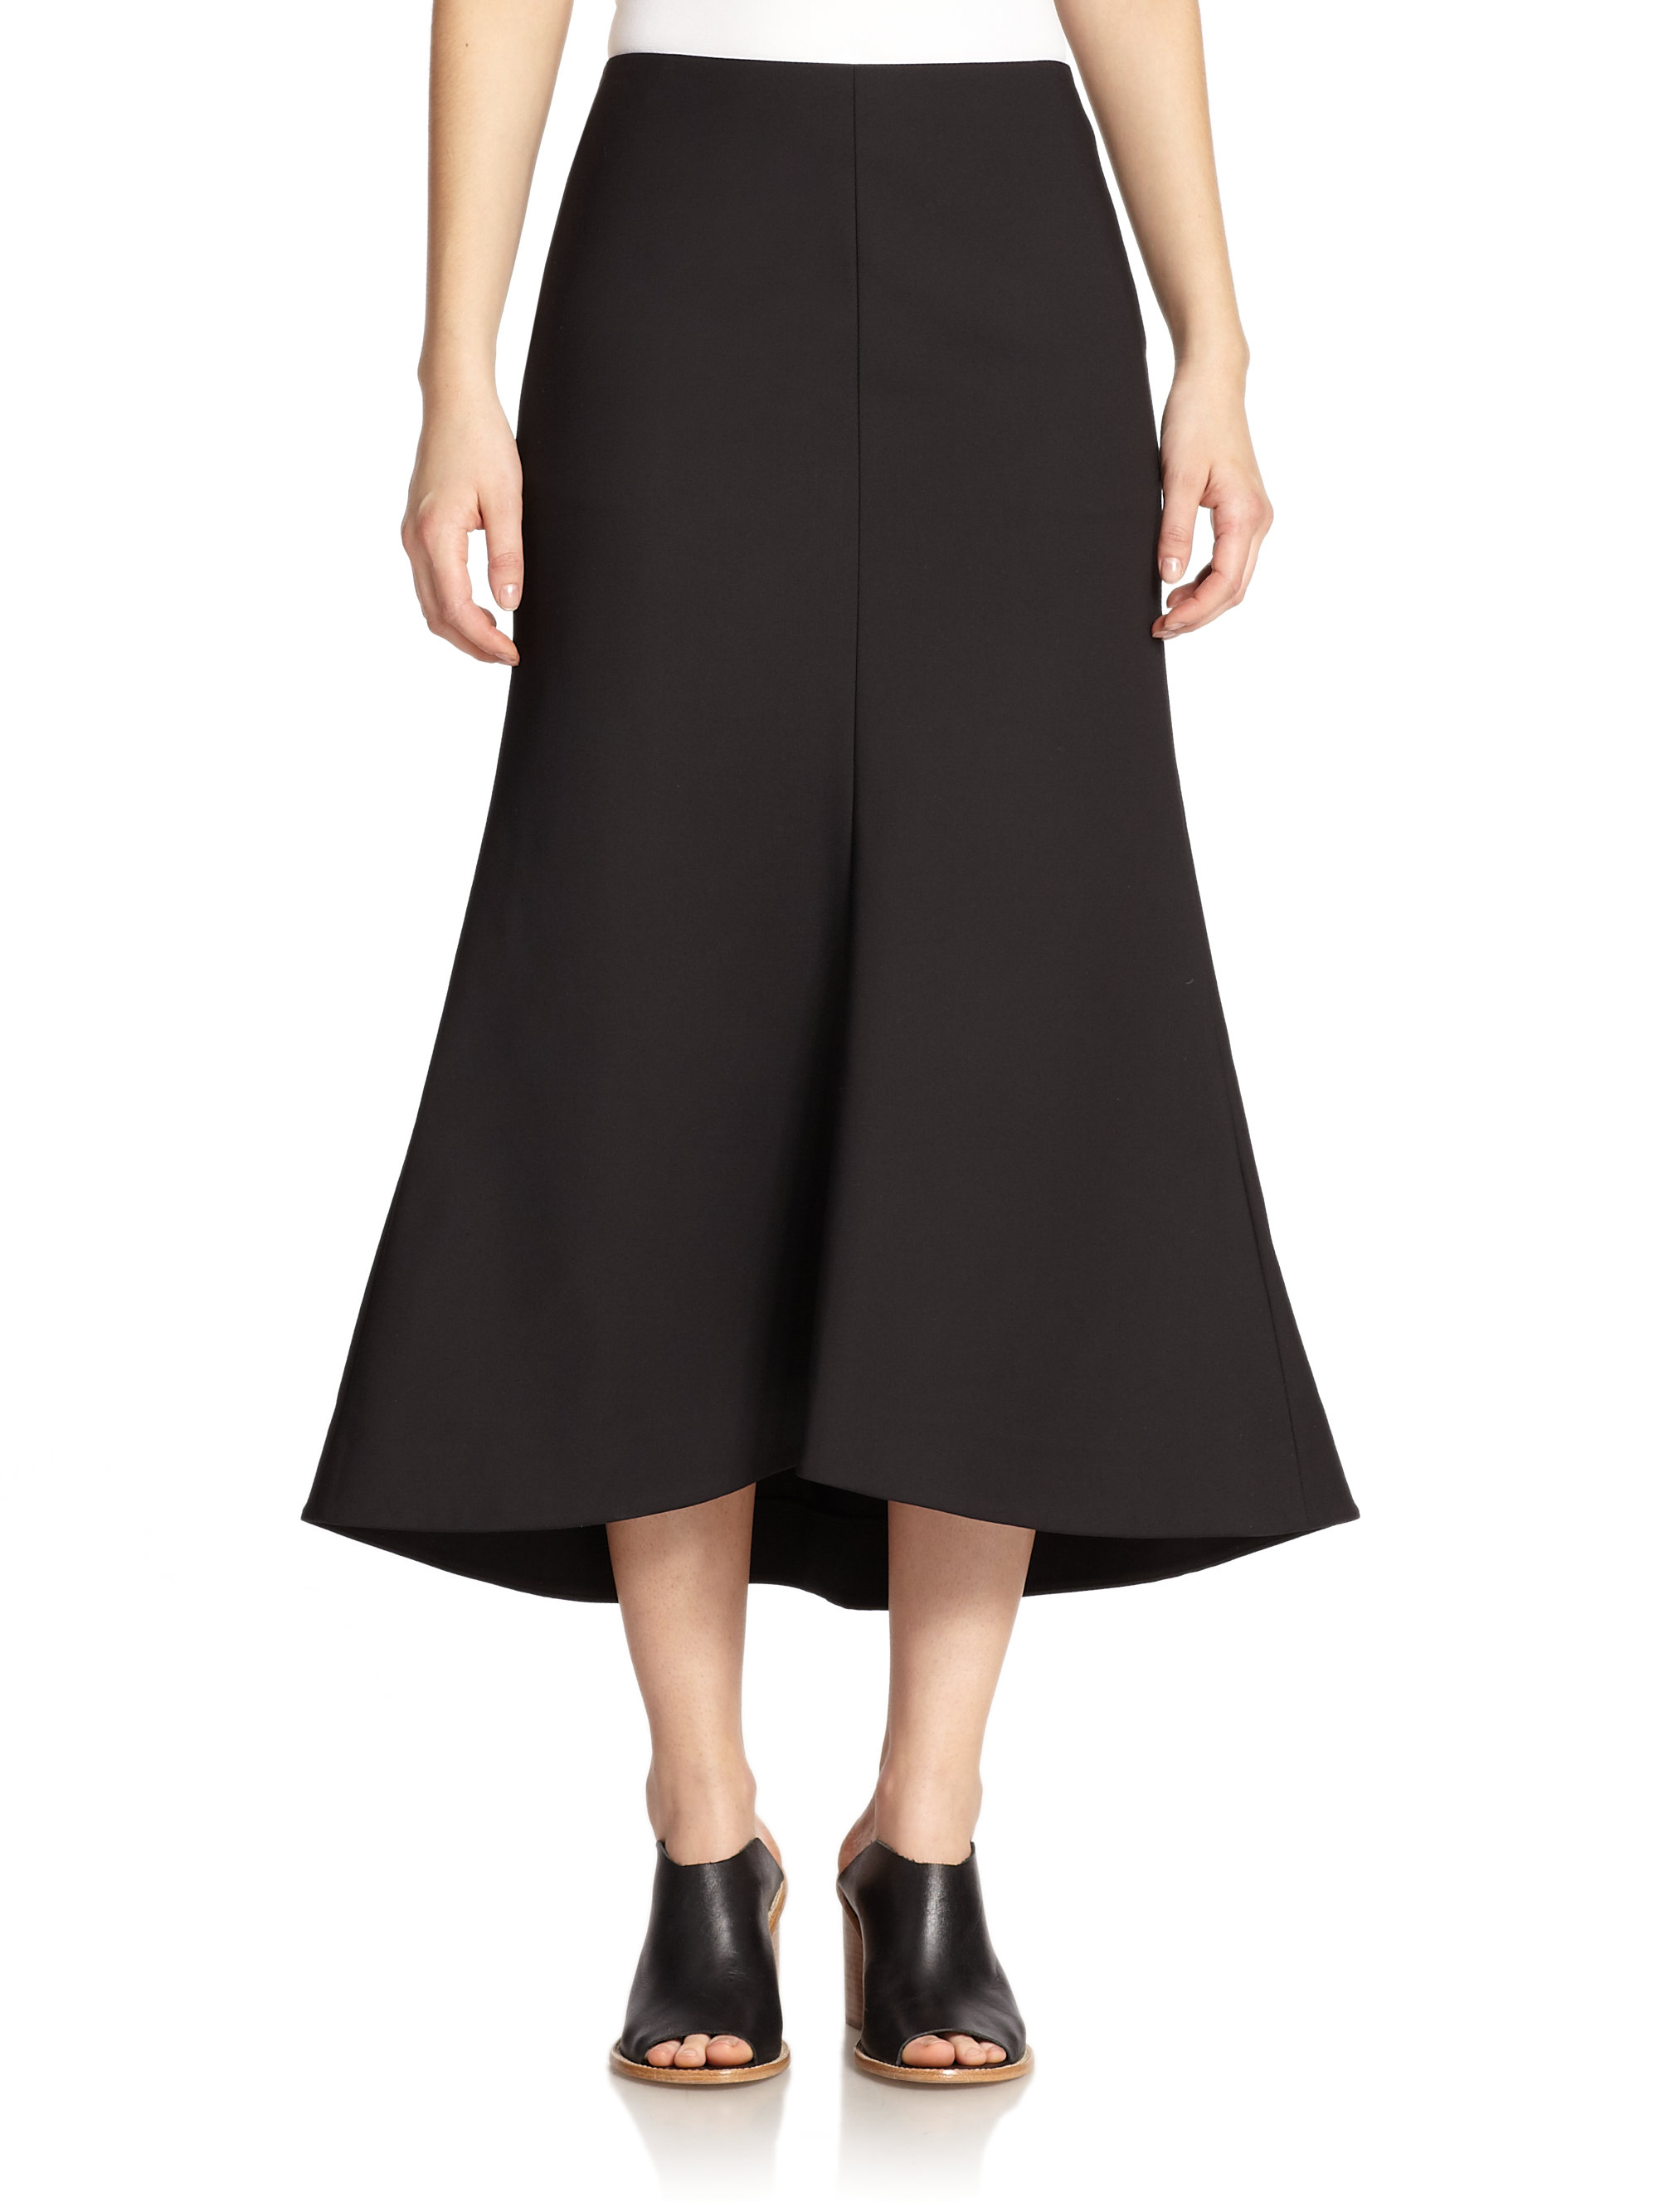 Tibi Agathe A-line Skirt in Black - Lyst